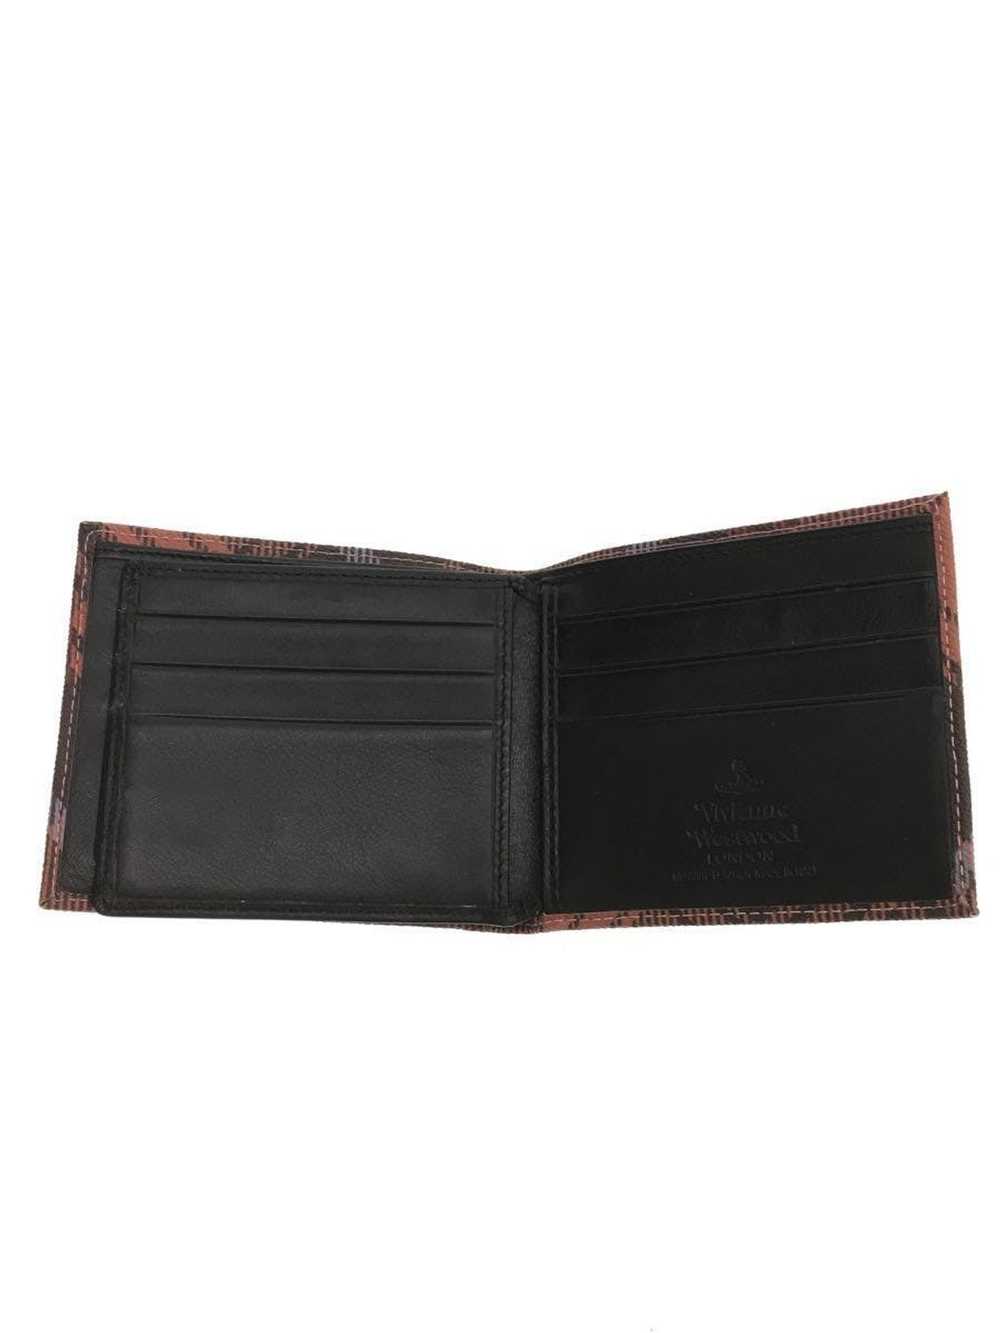 Vivienne Westwood Plaid Orb Leather Wallet - image 3